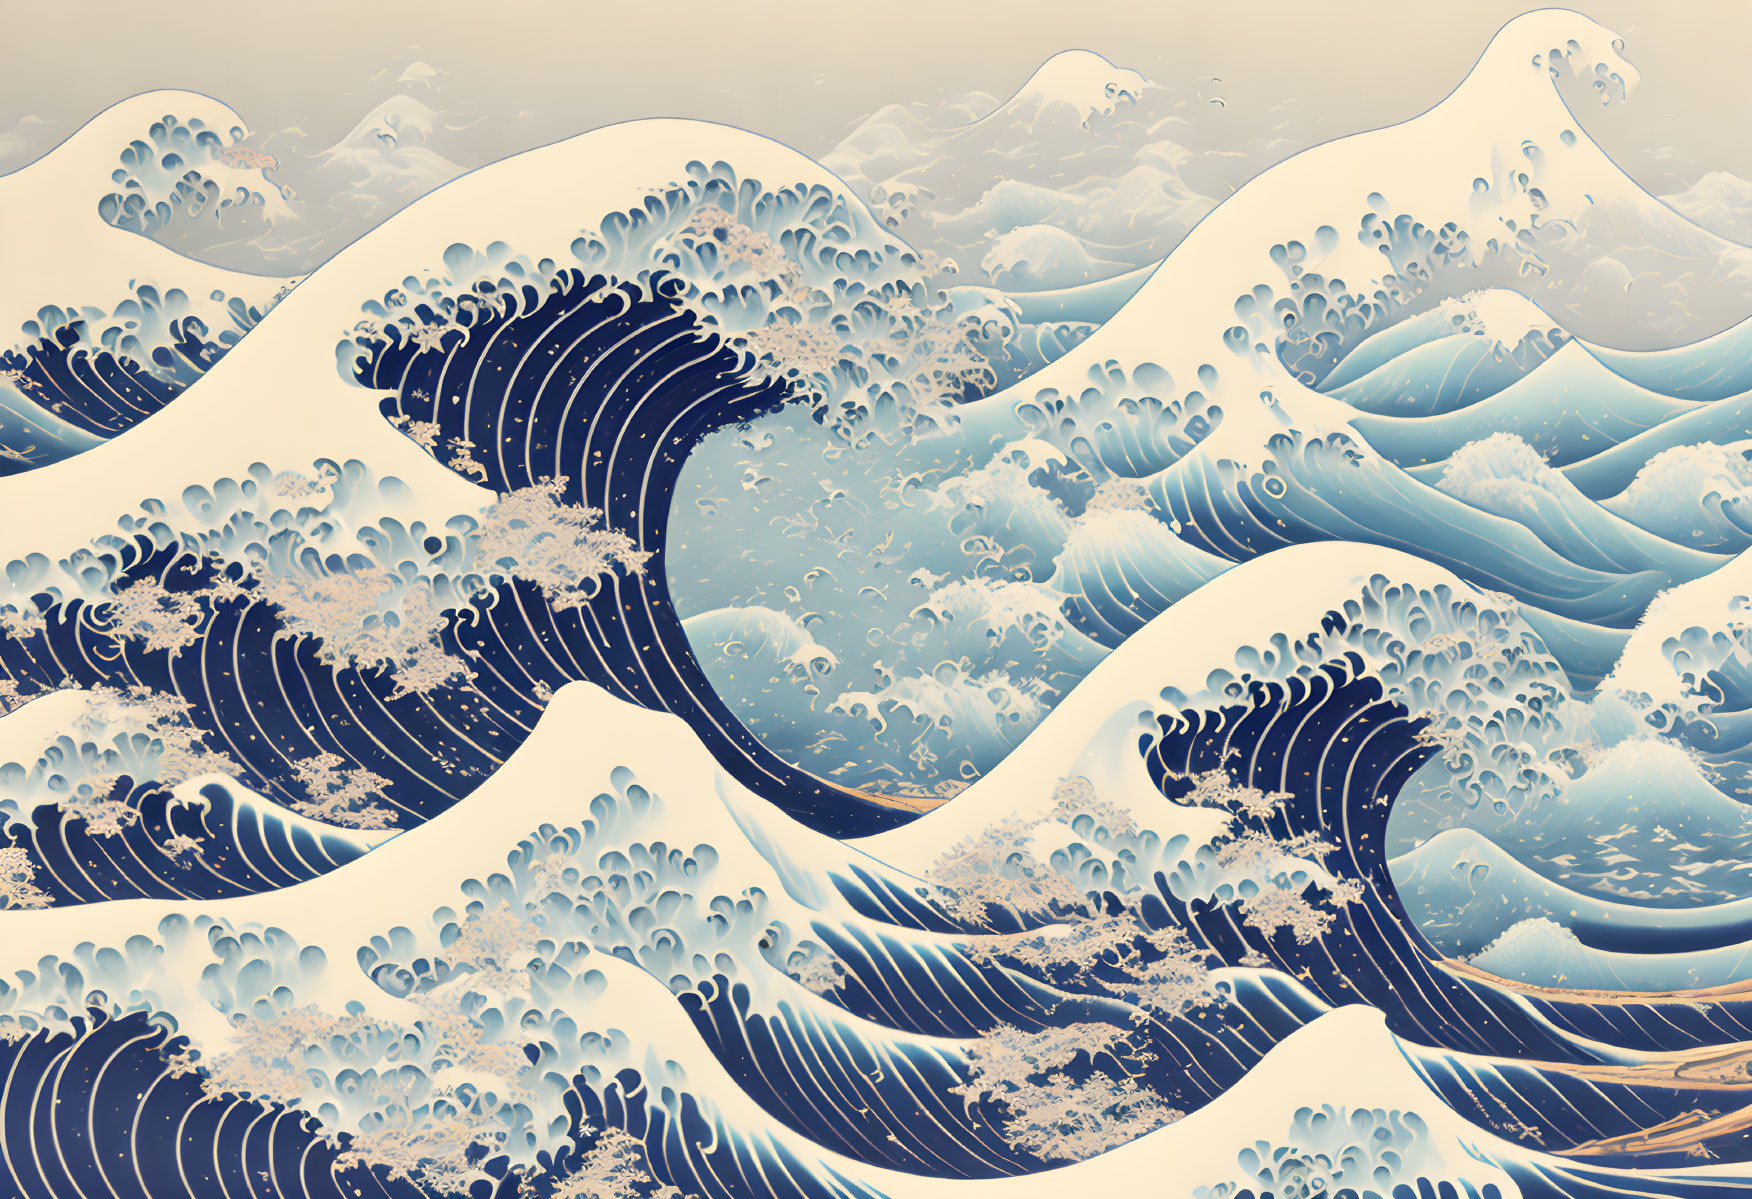 High-resolution printing, high sea waves, clarifyi